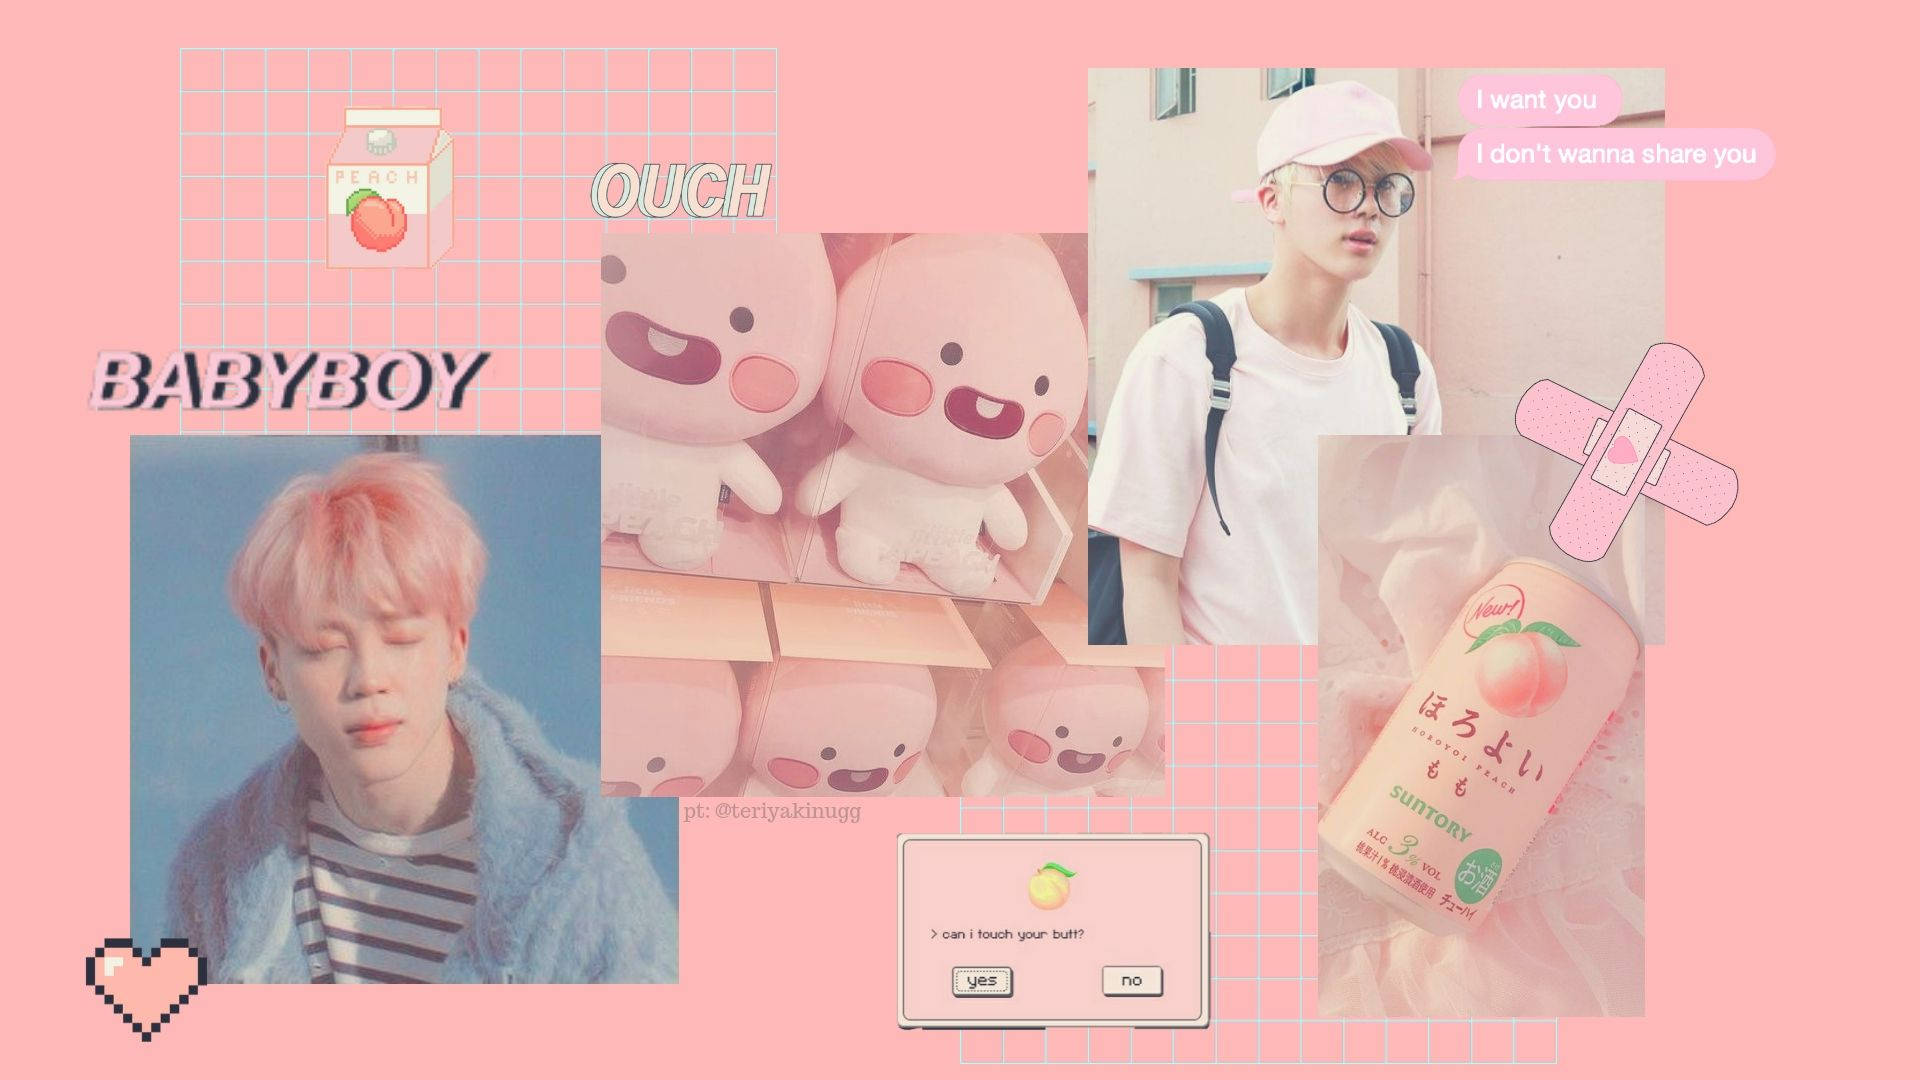 Bts Jimin And Jin Pastel Pink Background